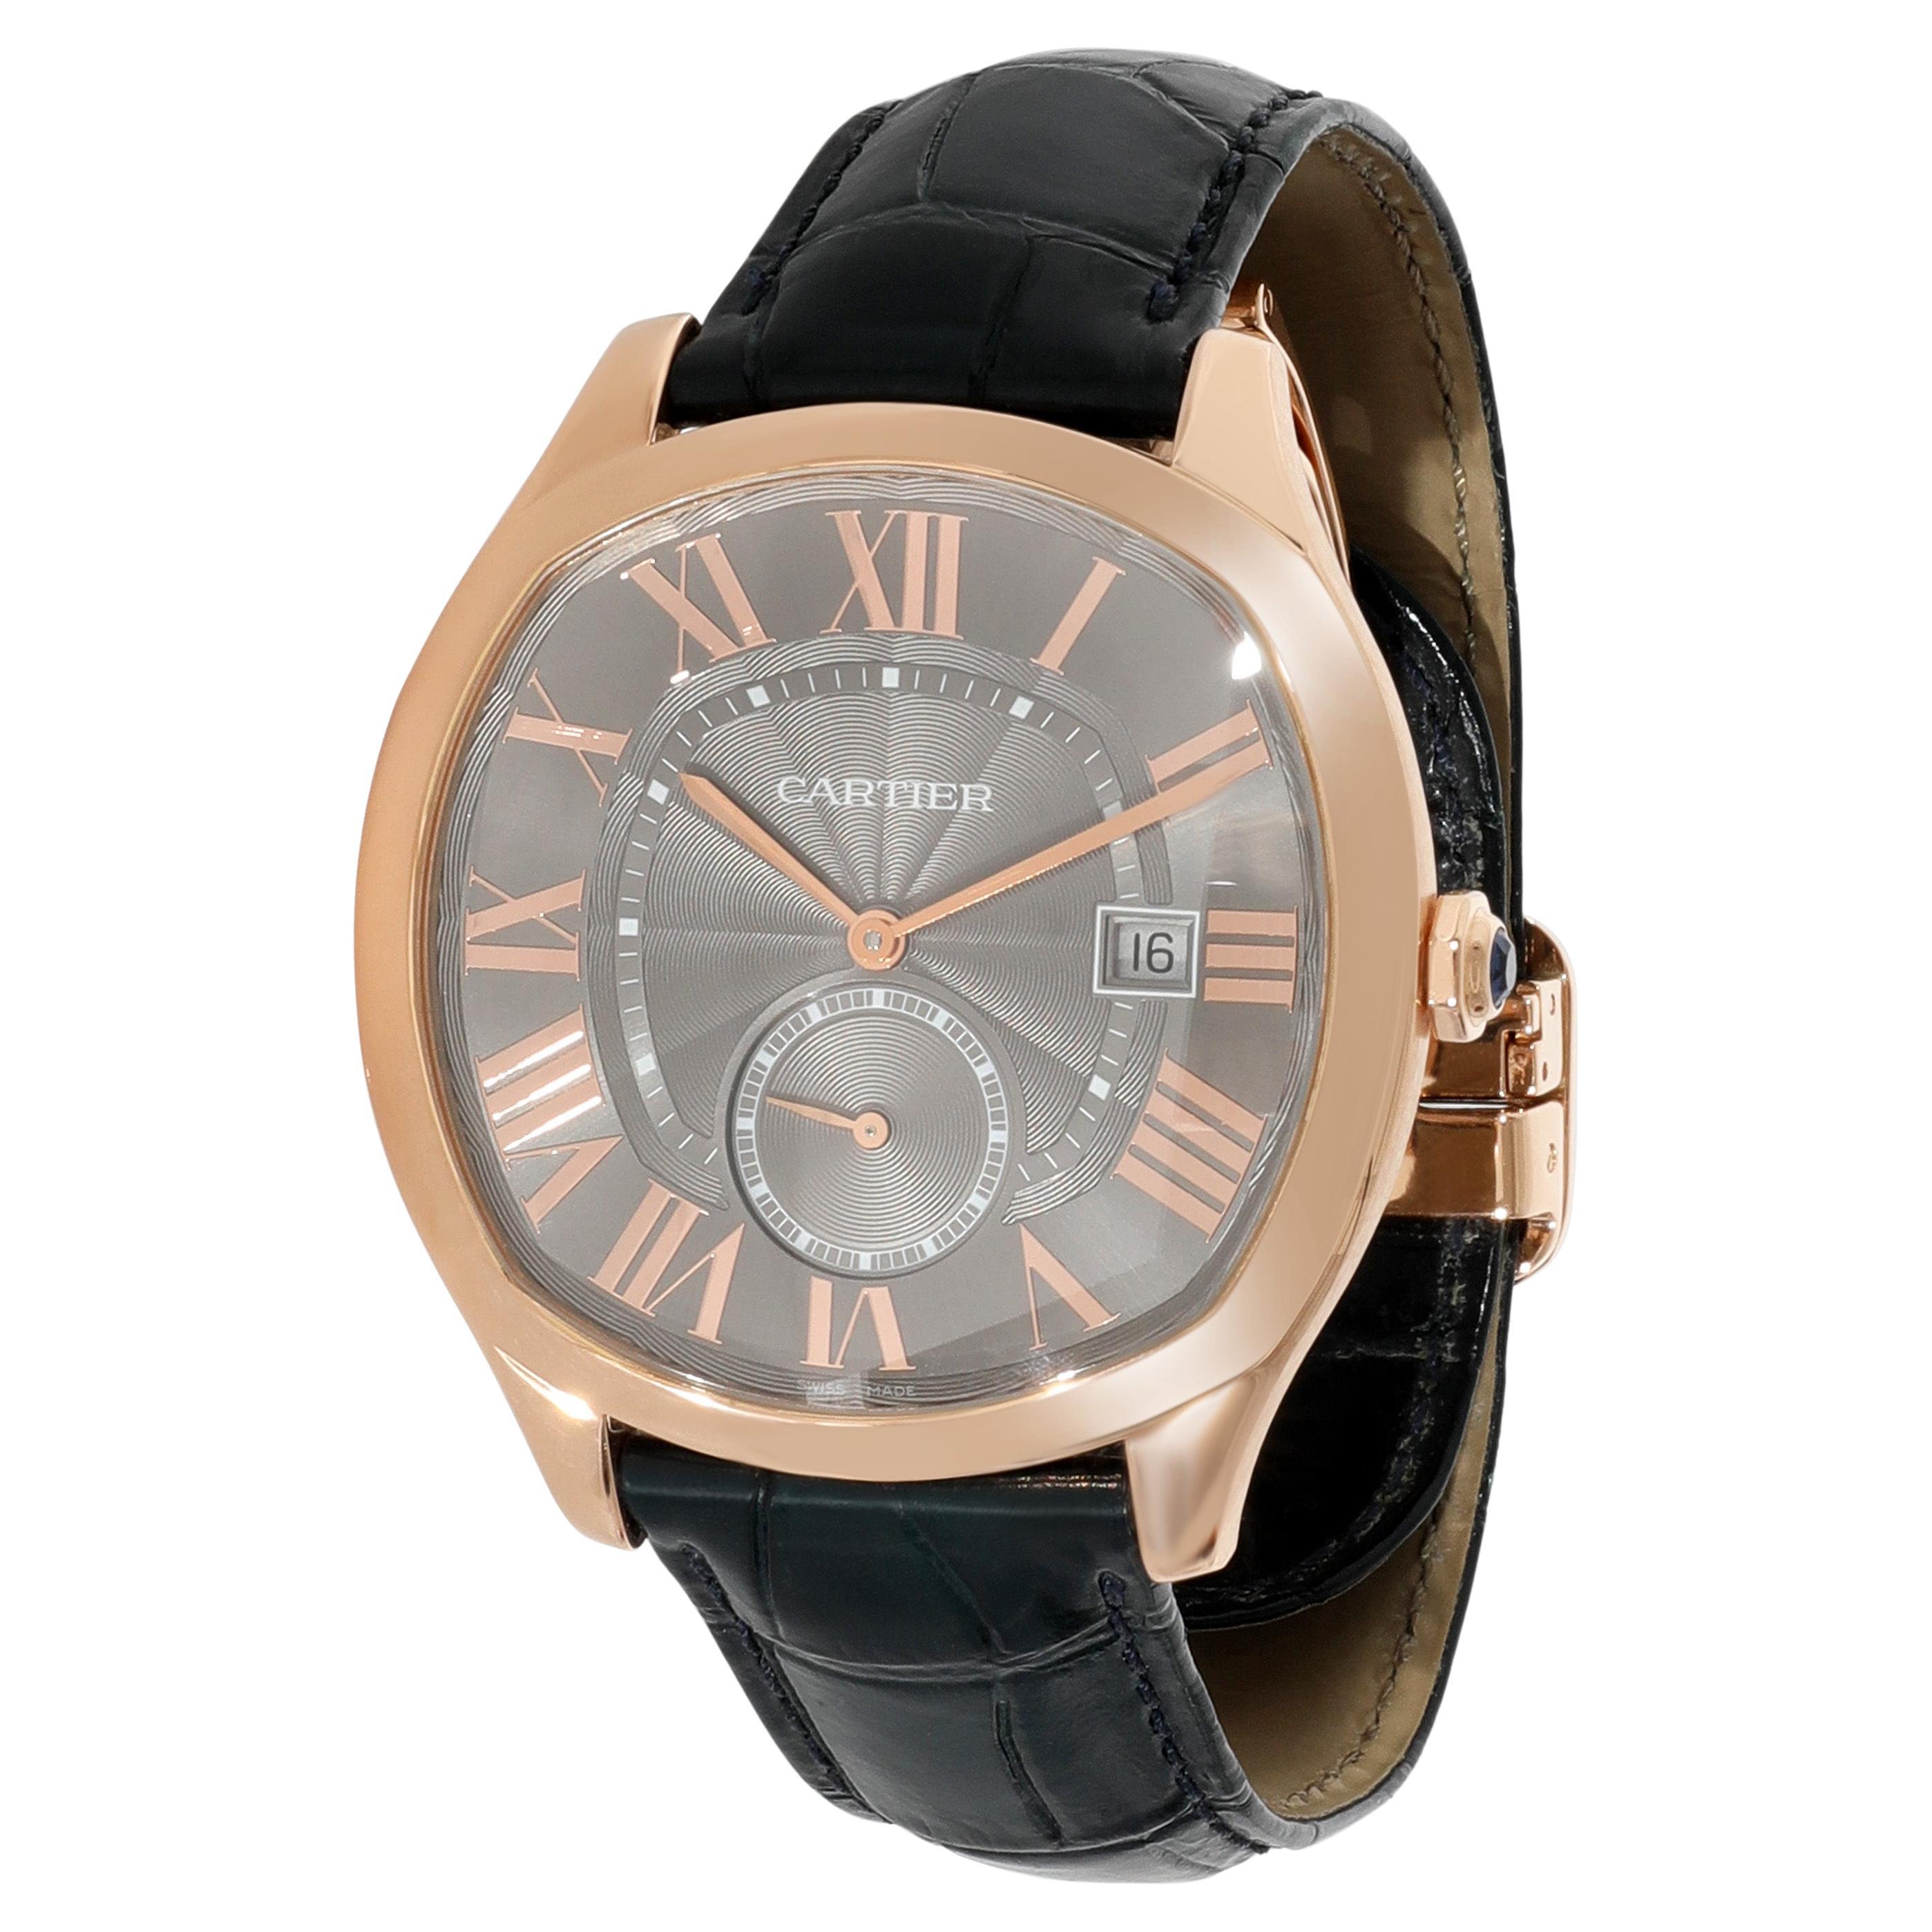 Cartier Drive de Cartier WGNM0004 Men's Watch in 18 Karat Rose Gold